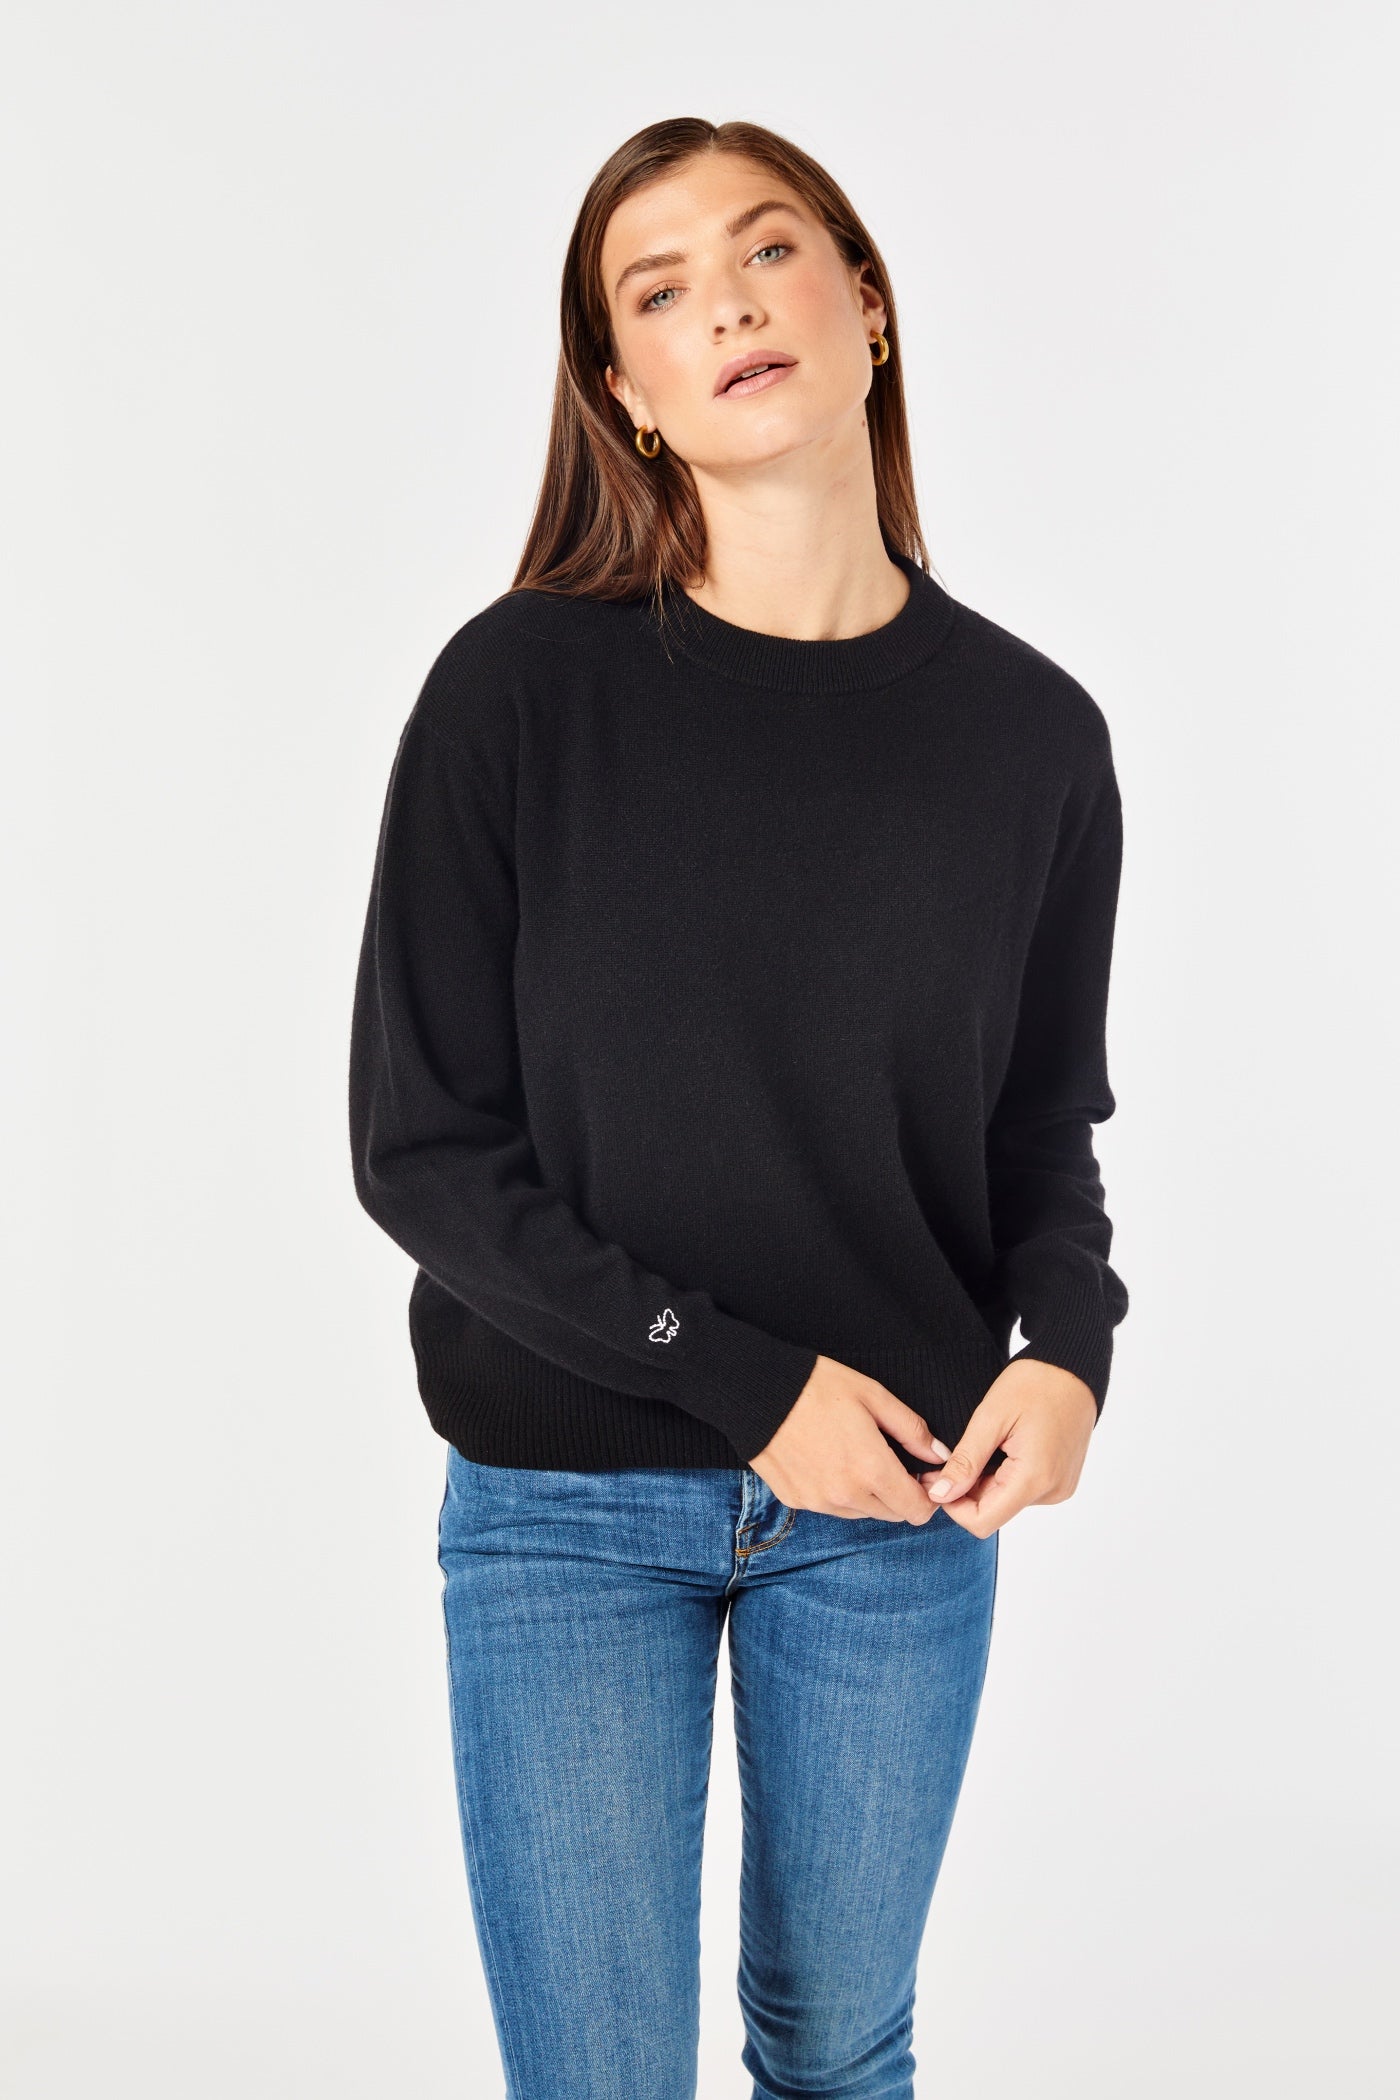 Caden Sweater-Cashmere-Black by Cartolina